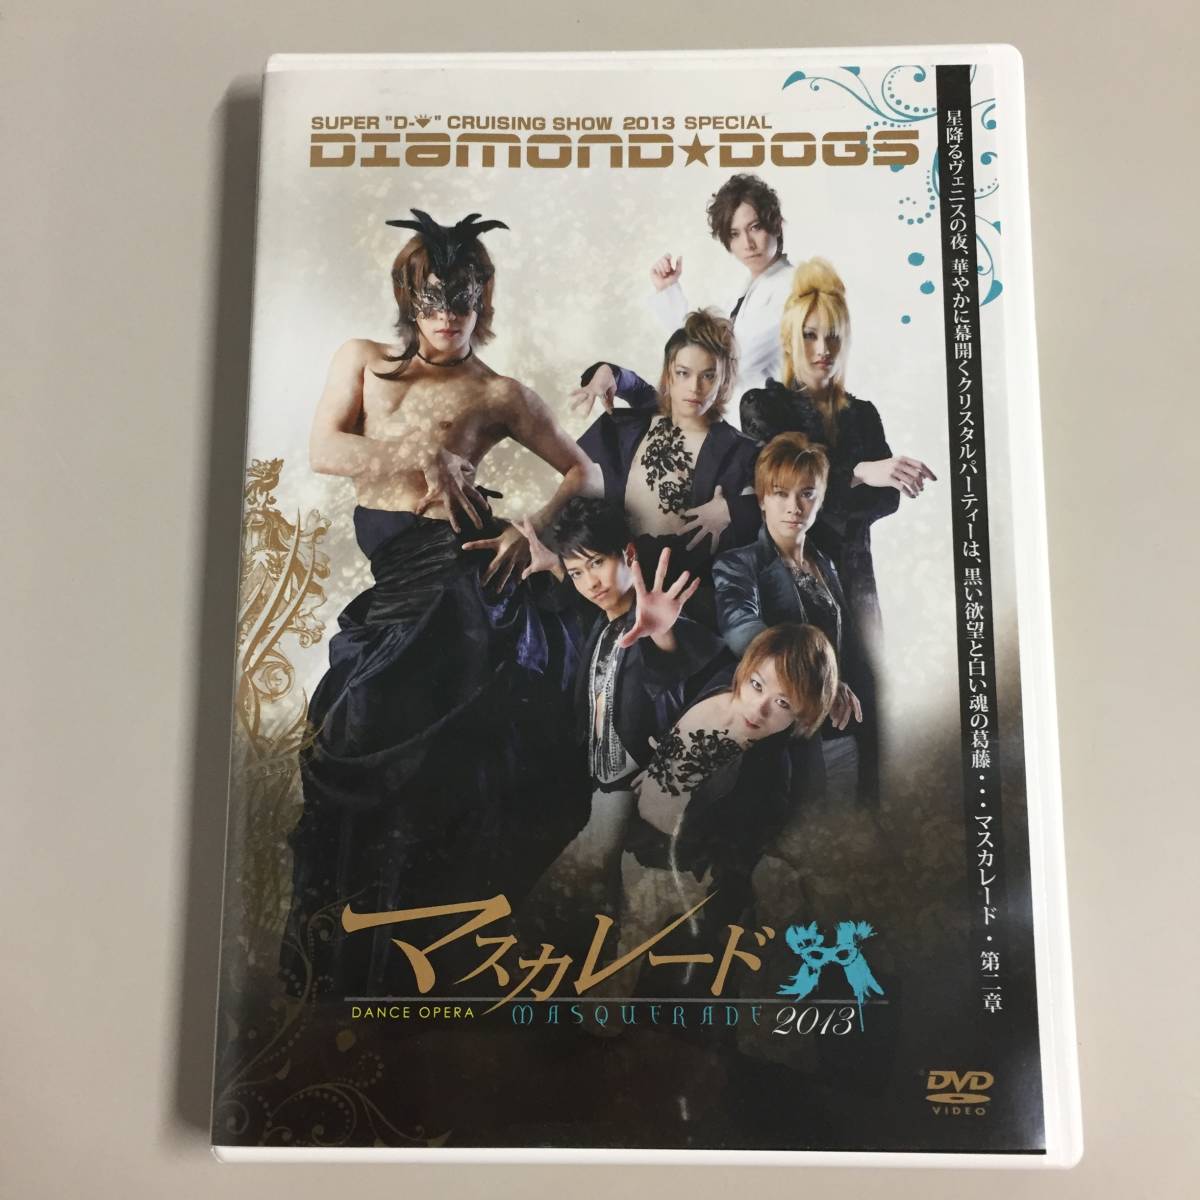 DVD ファニー diamond dogs 東山義久 - 通販 - gofukuyasan.com